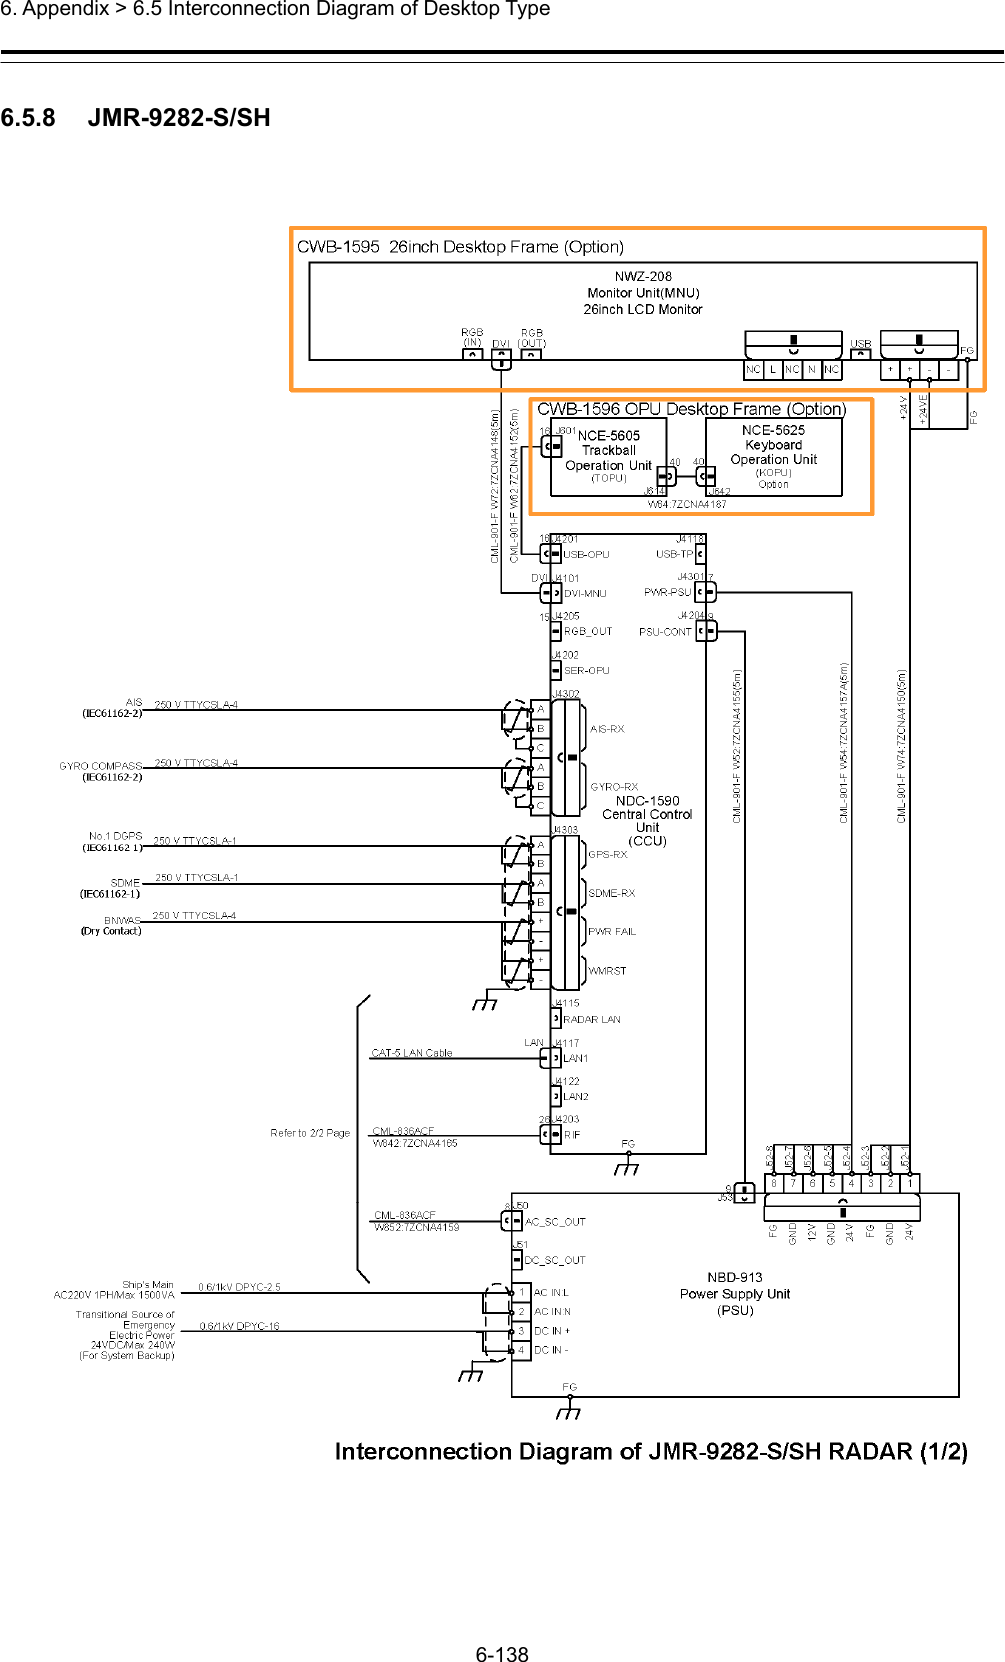  6. Appendix &gt; 6.5 Interconnection Diagram of Desktop Type 6-138  6.5.8   JMR-9282-S/SH  